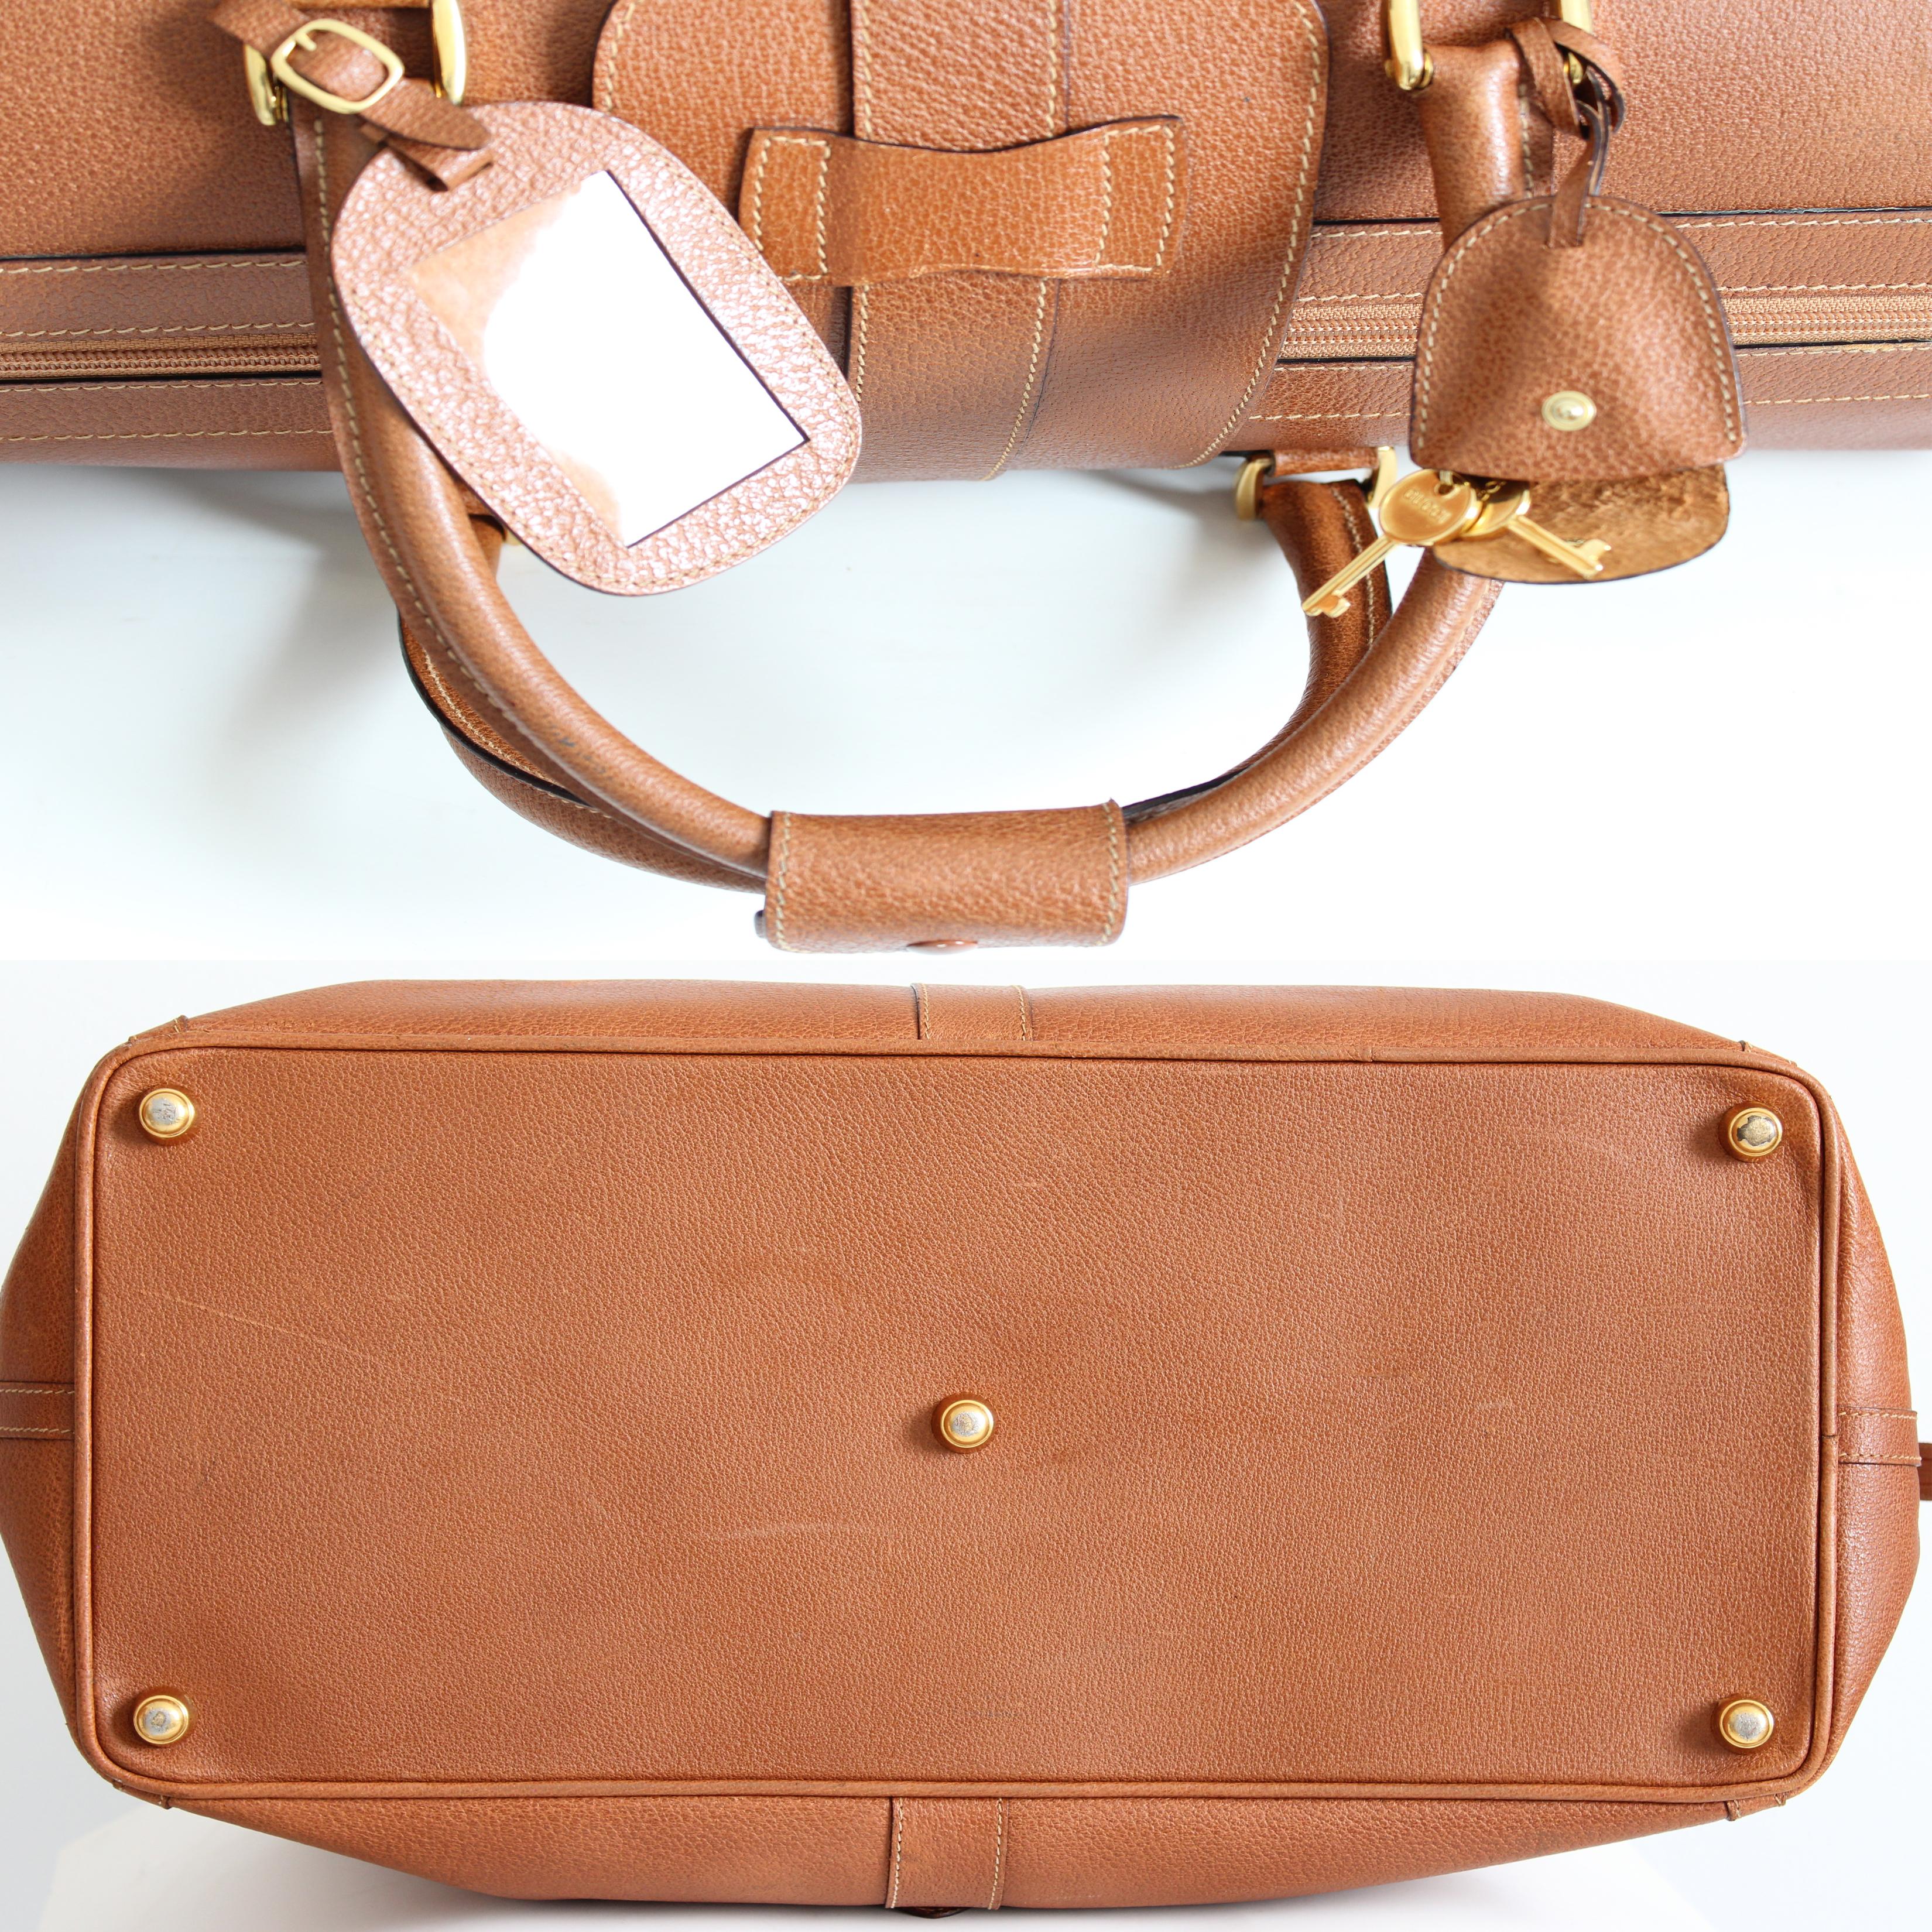 Gucci Large Duffel Travel Bag Pigskin Leather Luggage Rare 65cm  1